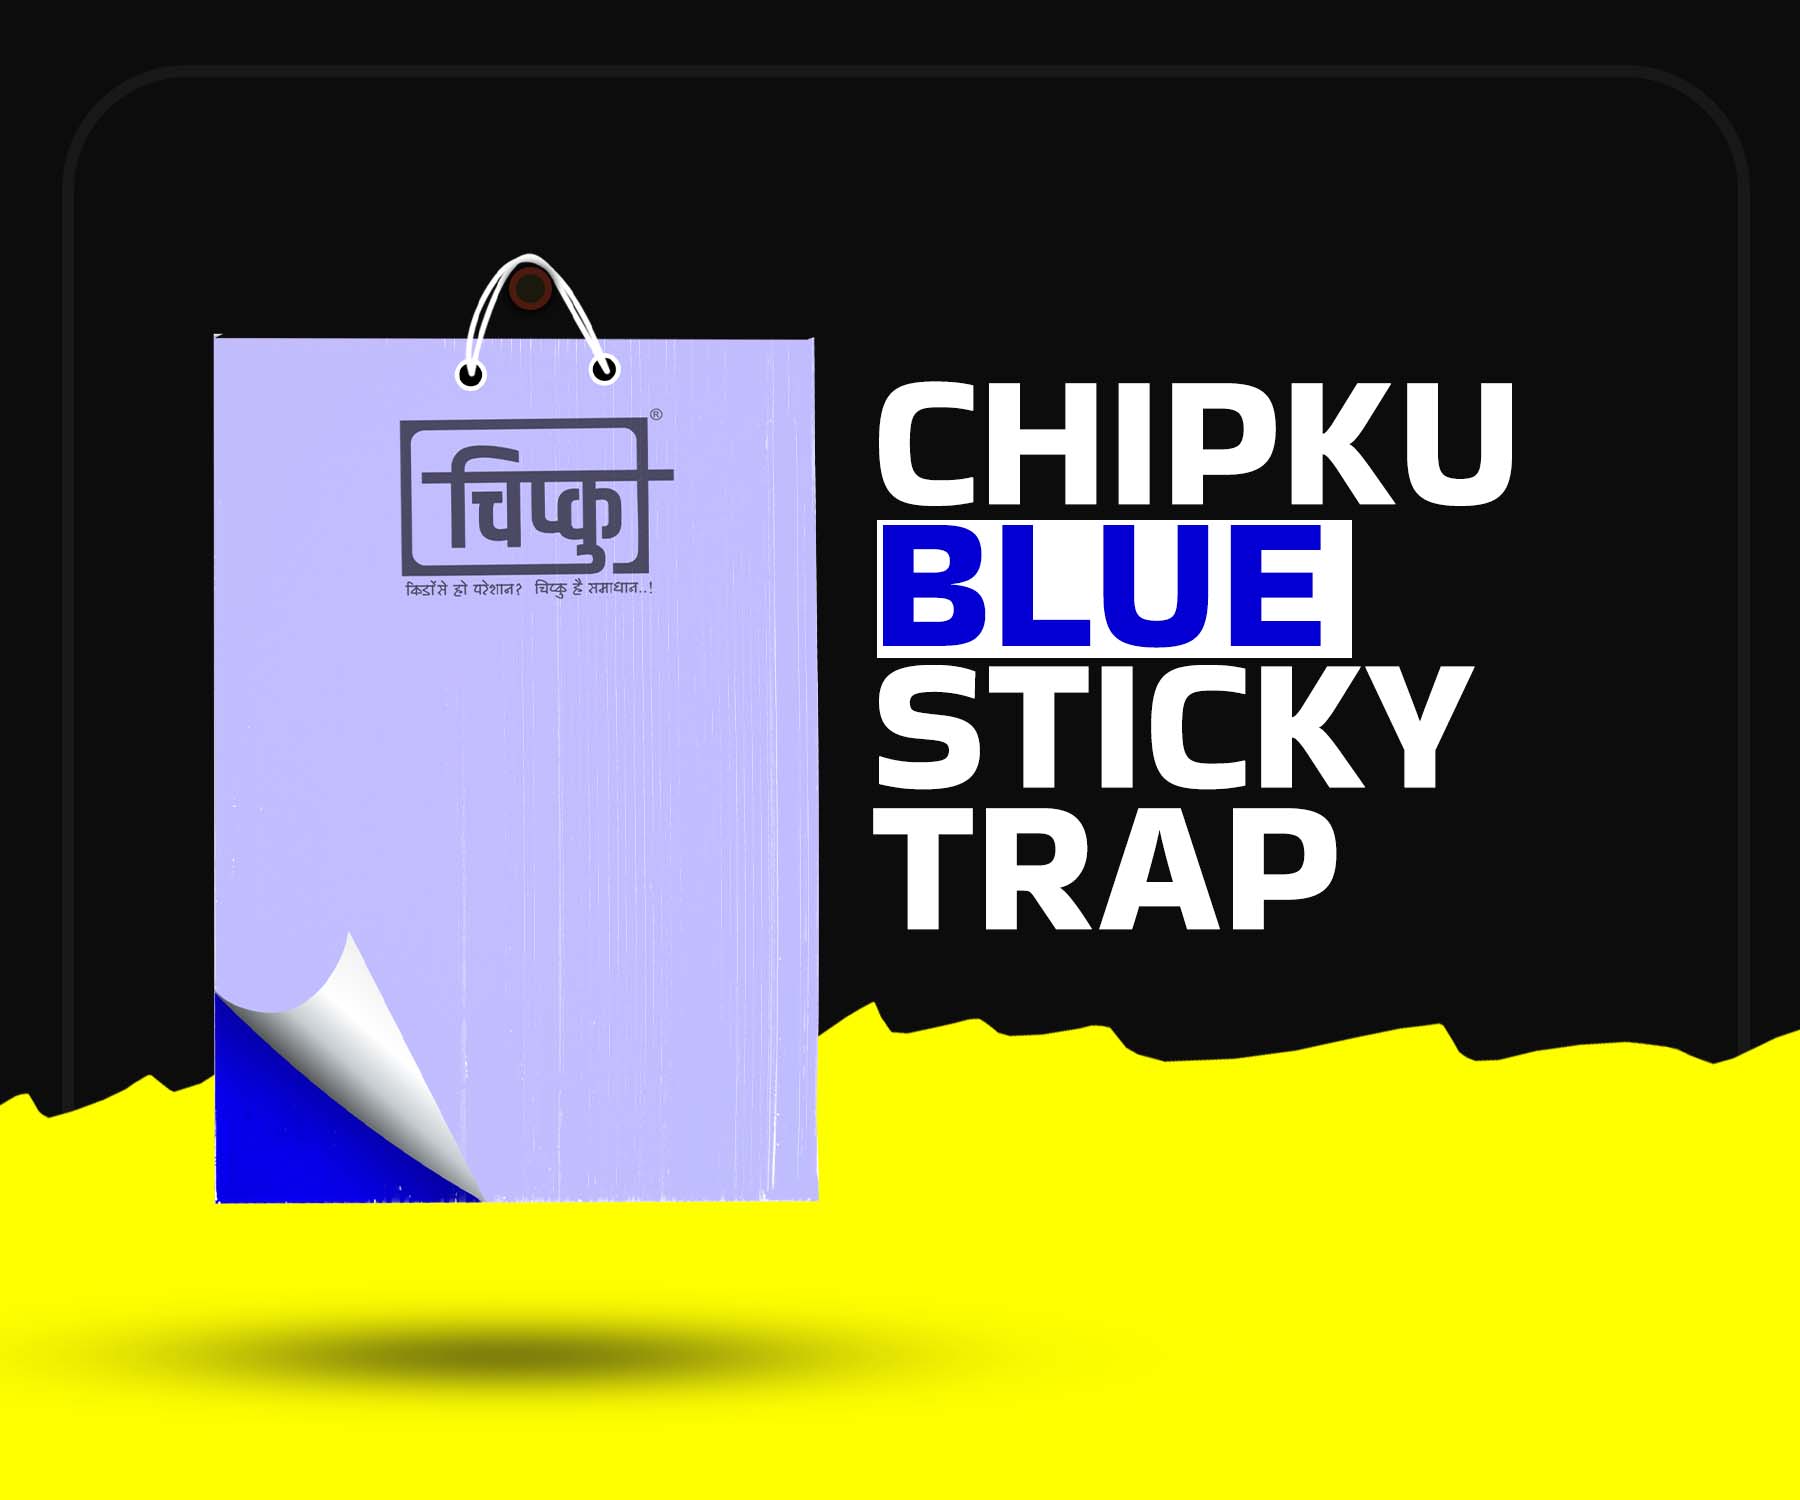 Chipku White sticky insect glue trap  